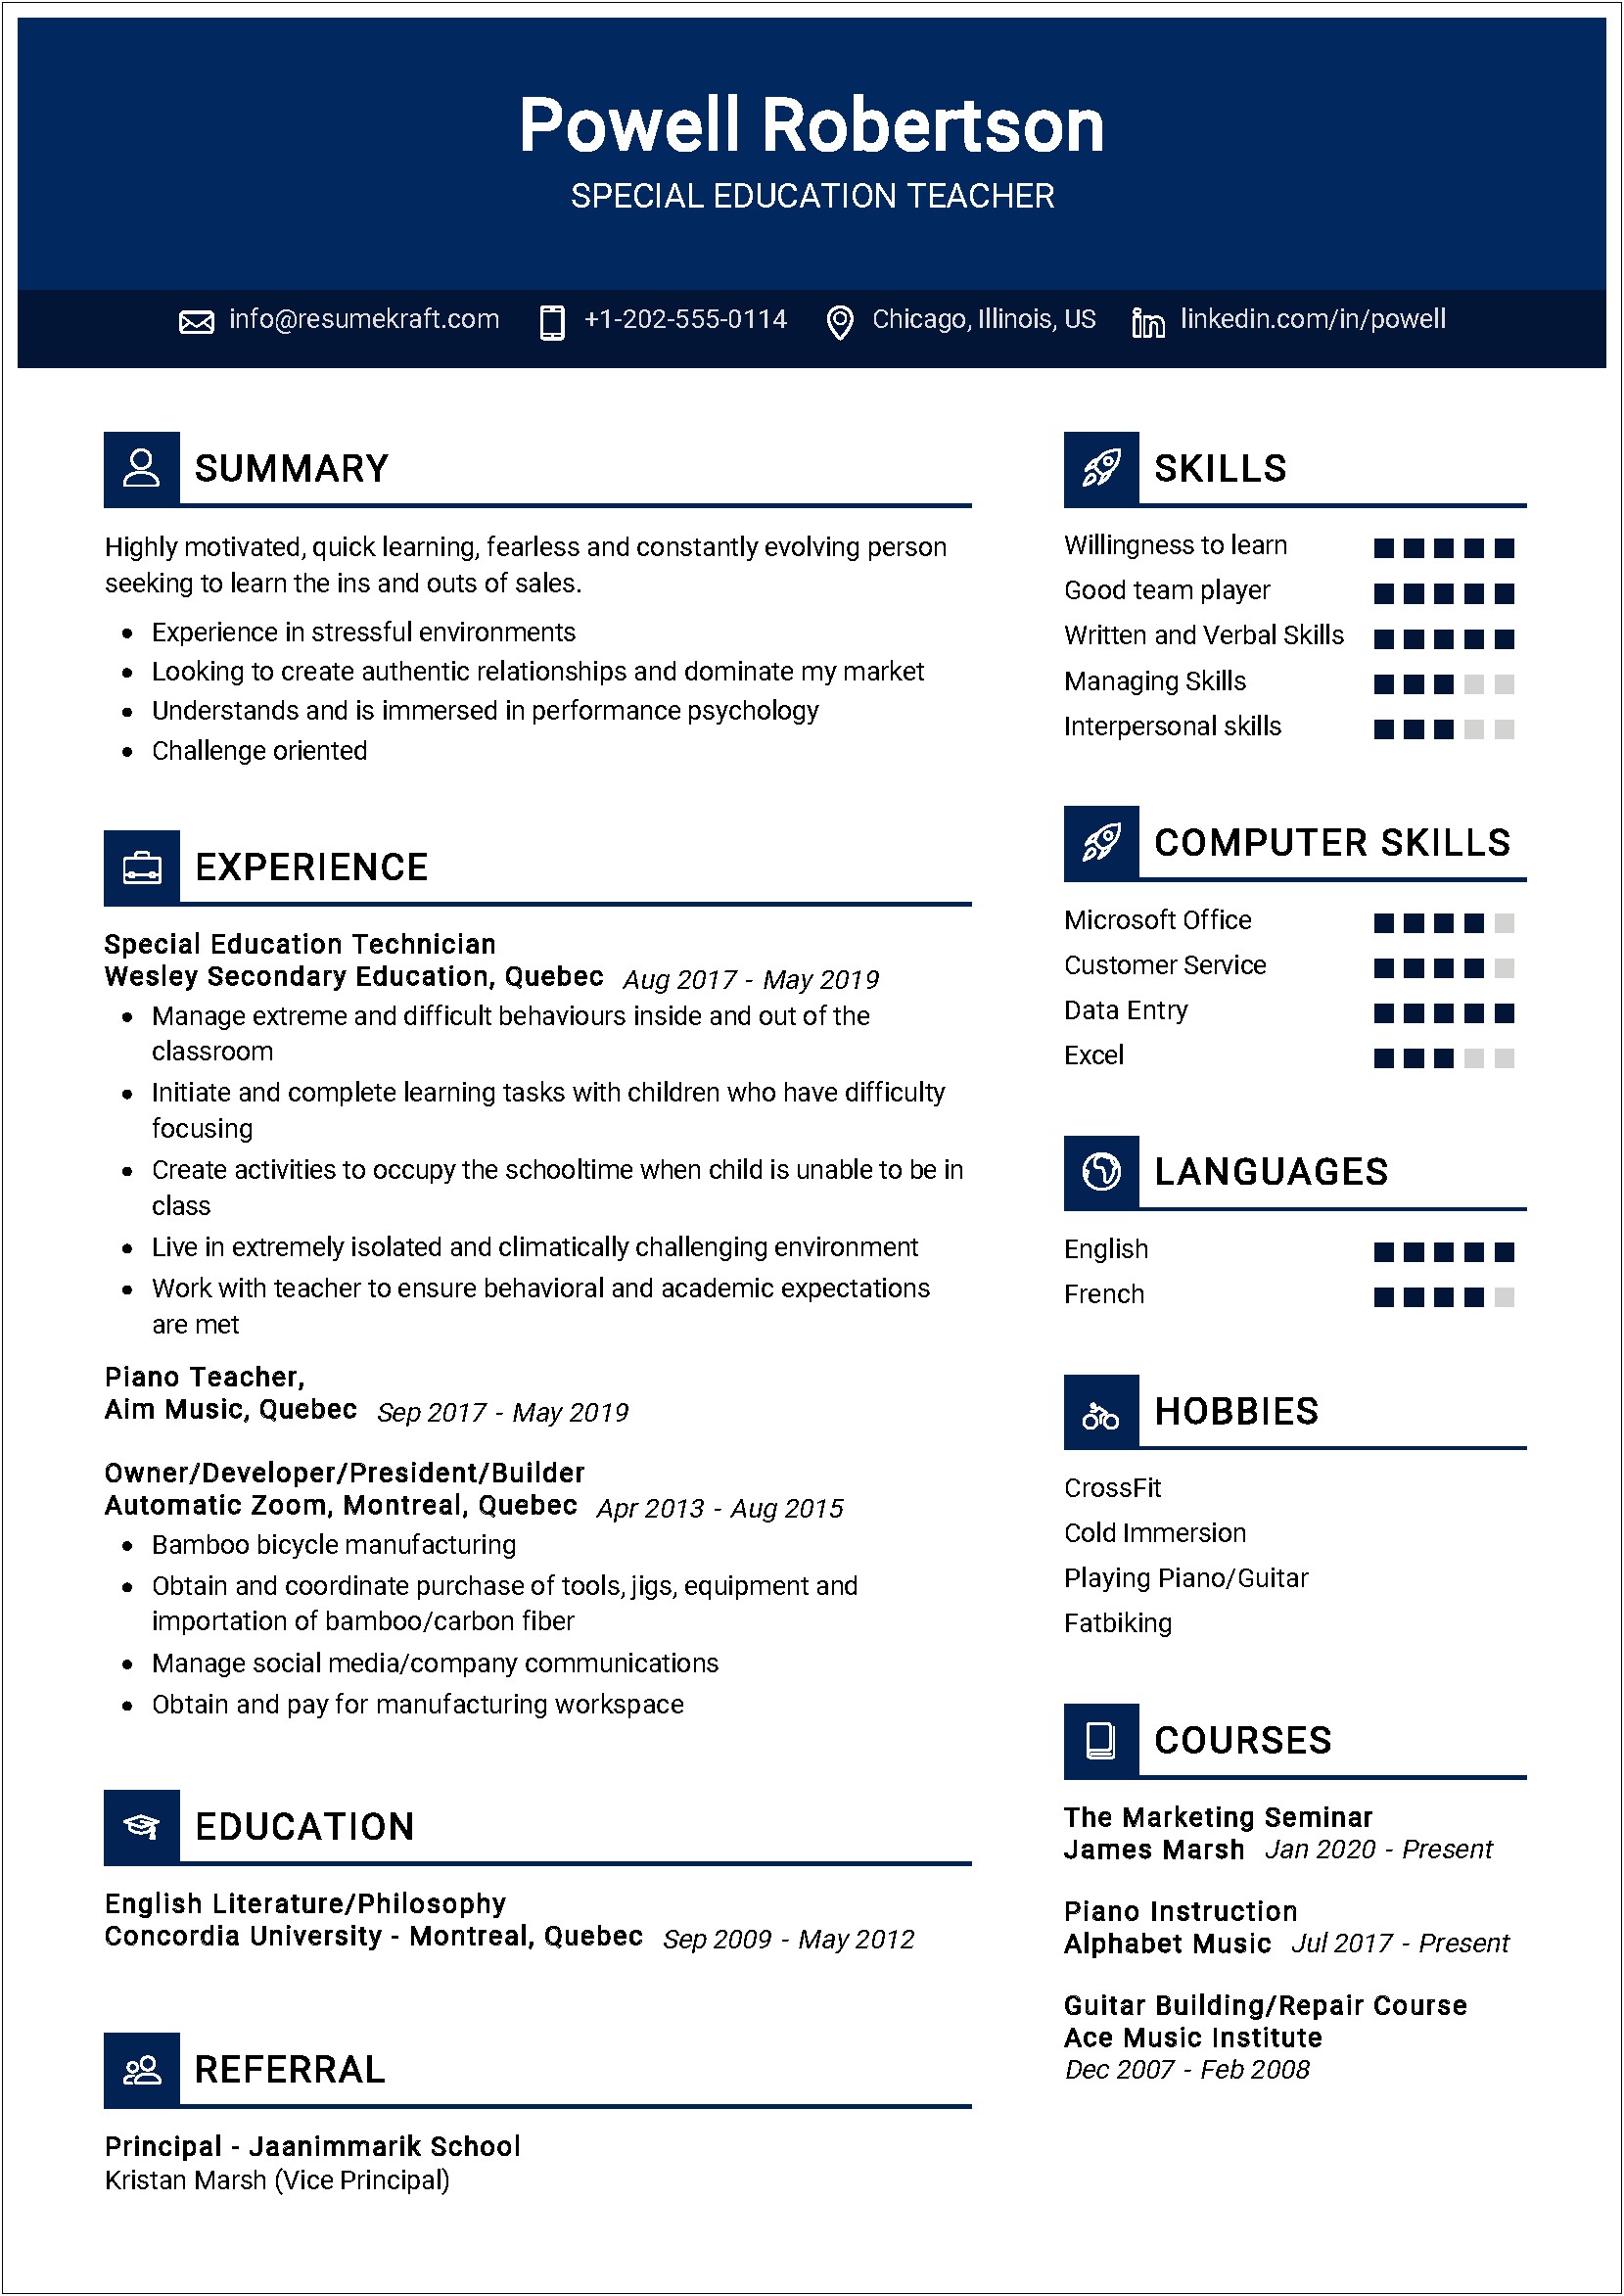 Special Education Paraprofessional Job Description Resume